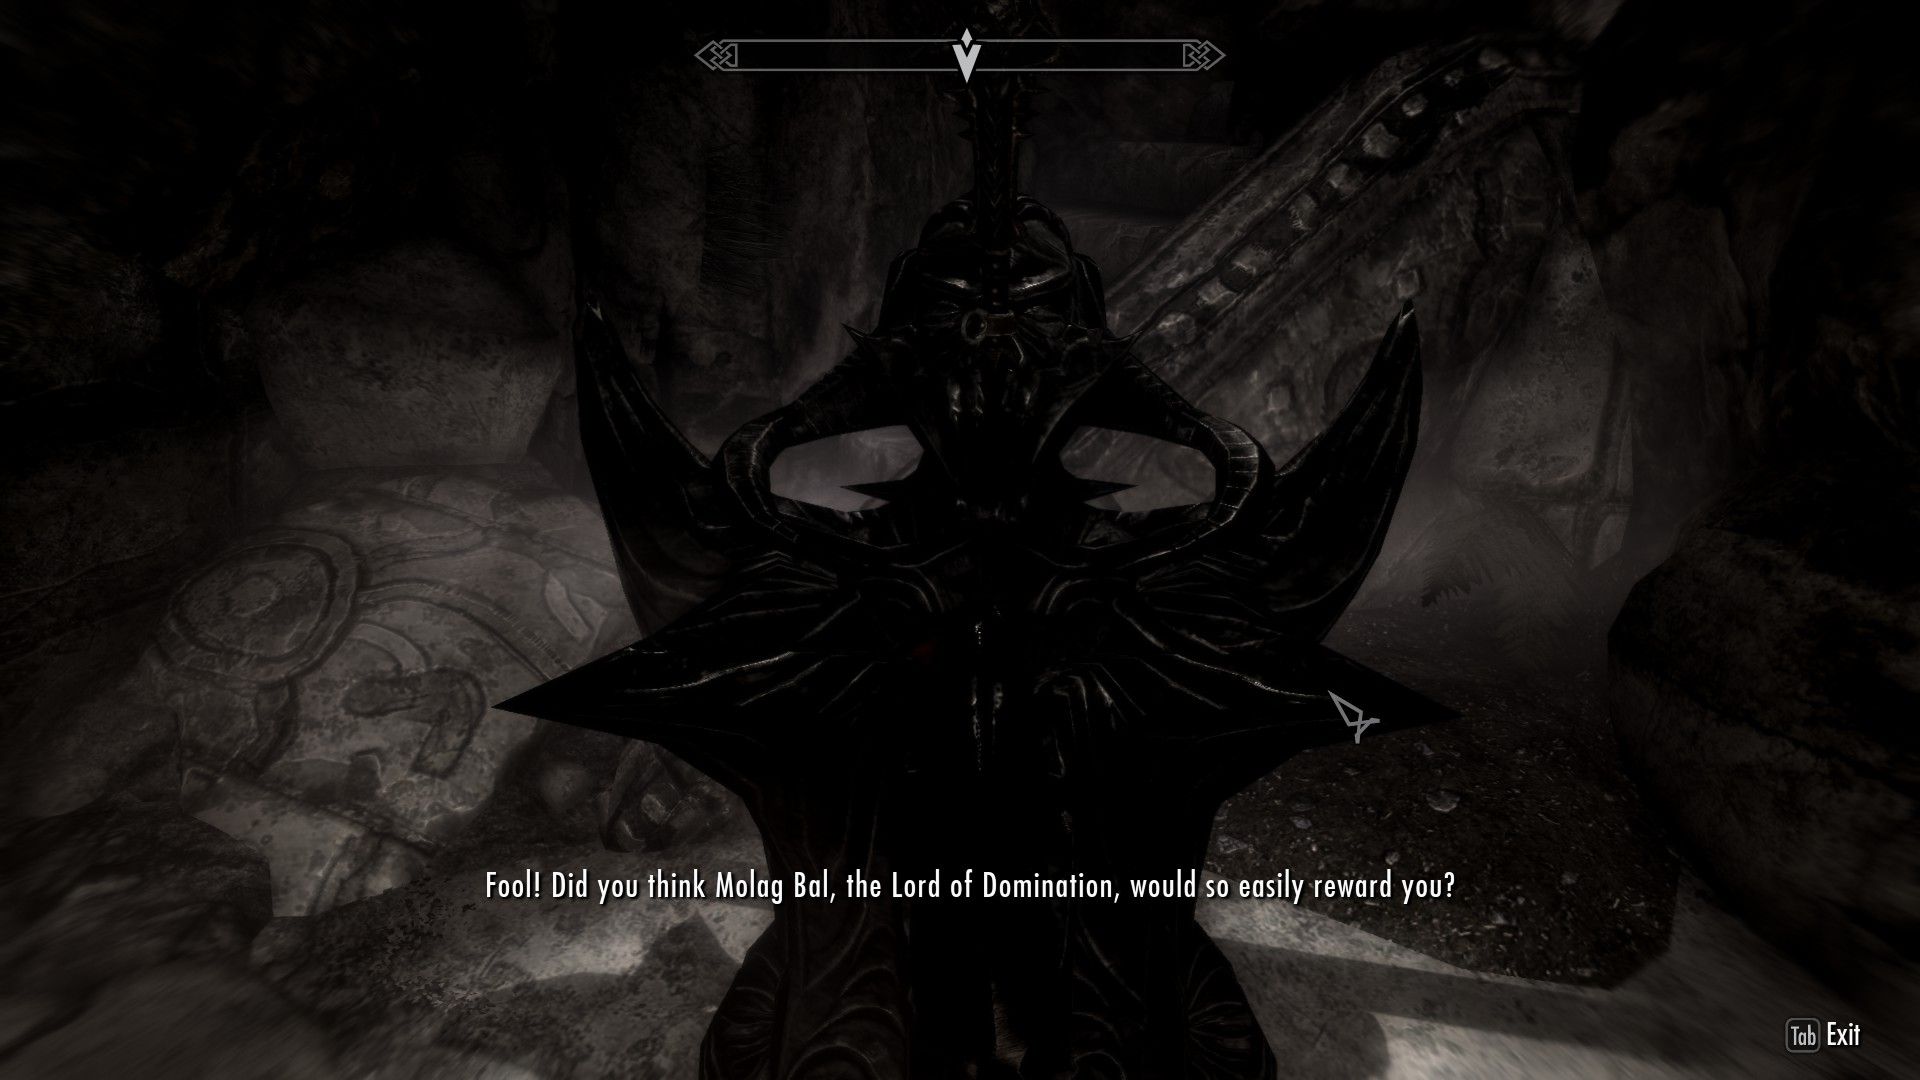 A malevolent god speaks to a hapless adventurer through his profane, black metal altar